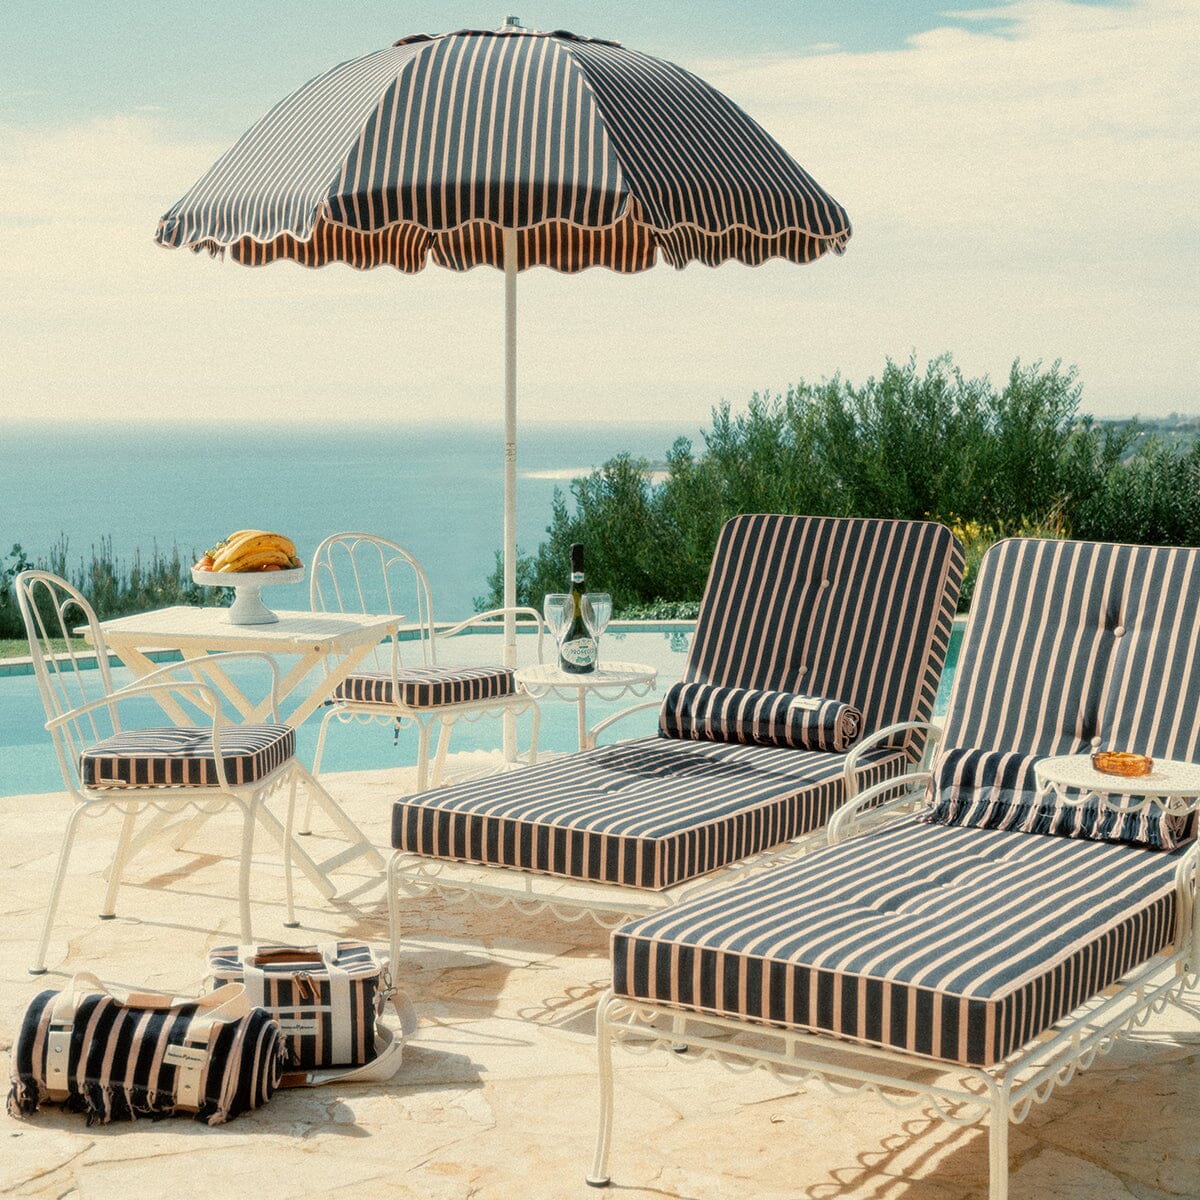 The Beach Blanket - Monaco Navy And Pink Stripe Beach Blanket Business & Pleasure Co 